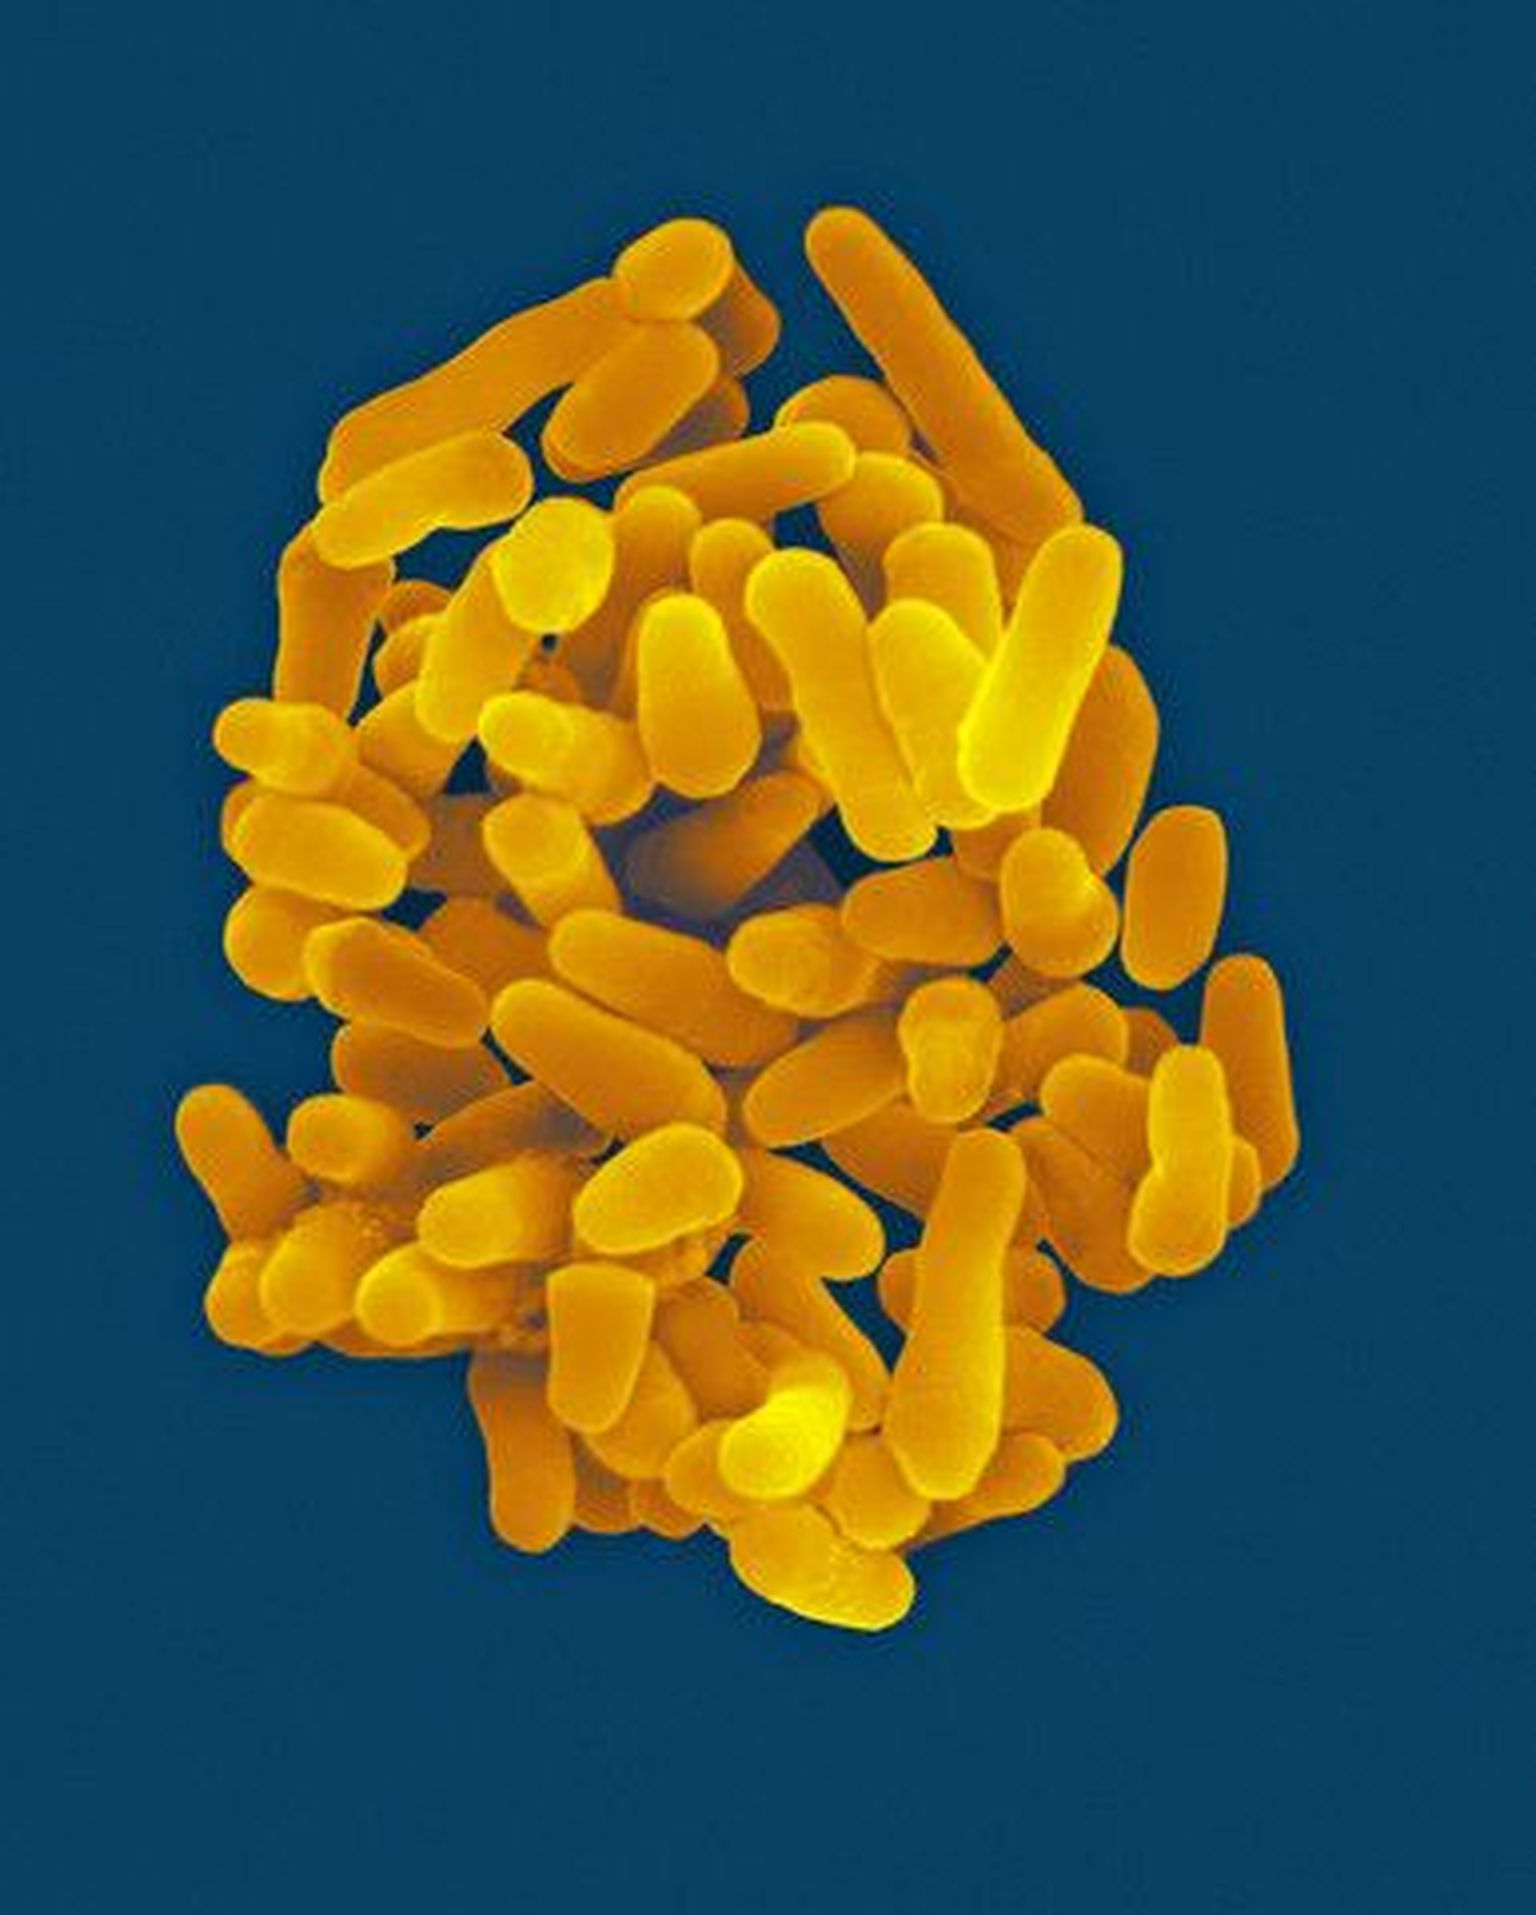 Туберкулезная бактерия Mycobacterium Tuberculosis.